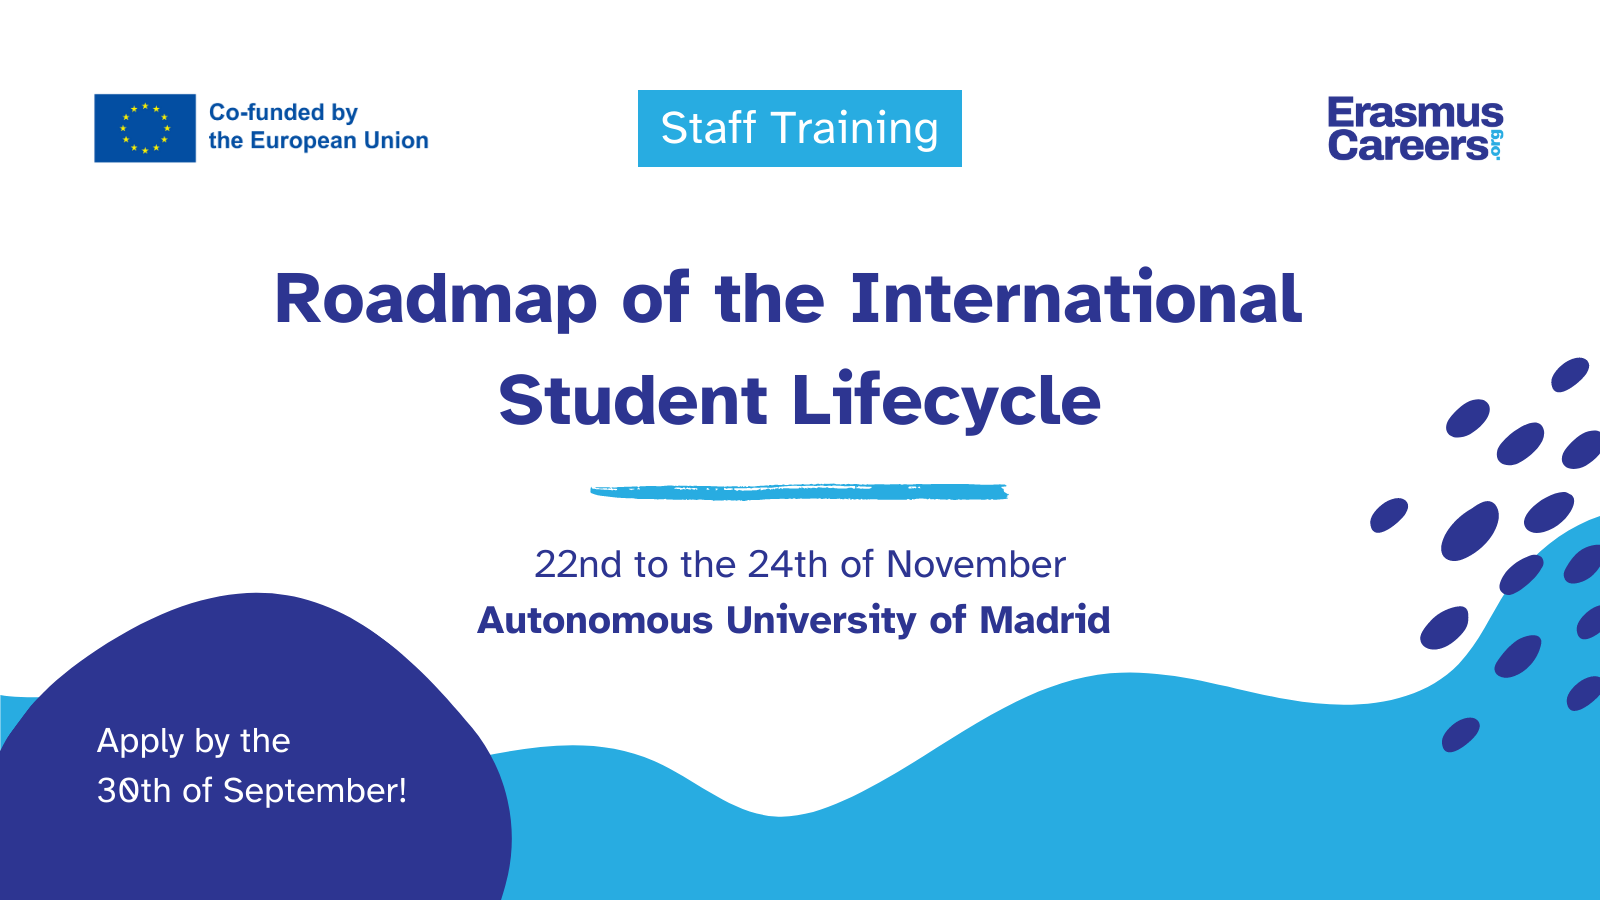 ERASMUS CAREERS | TRAINING IN MADRID “ROADMAP OF THE INTERNATIONAL STUDENT LIFECYCLE”